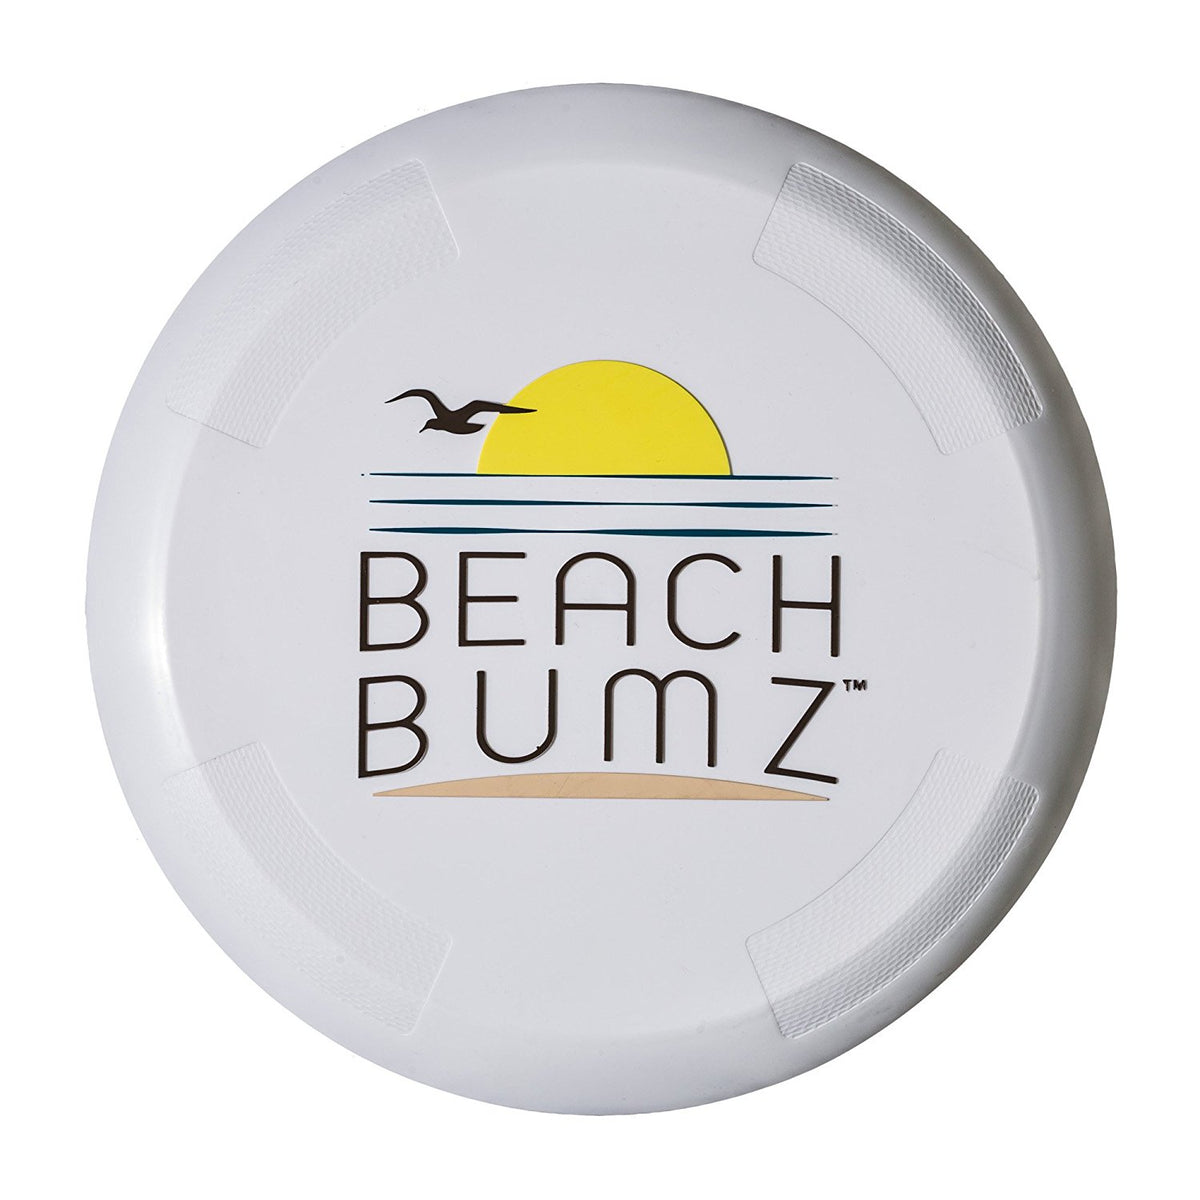 Franklin 53114 Beach Bumz Flying Disc, White